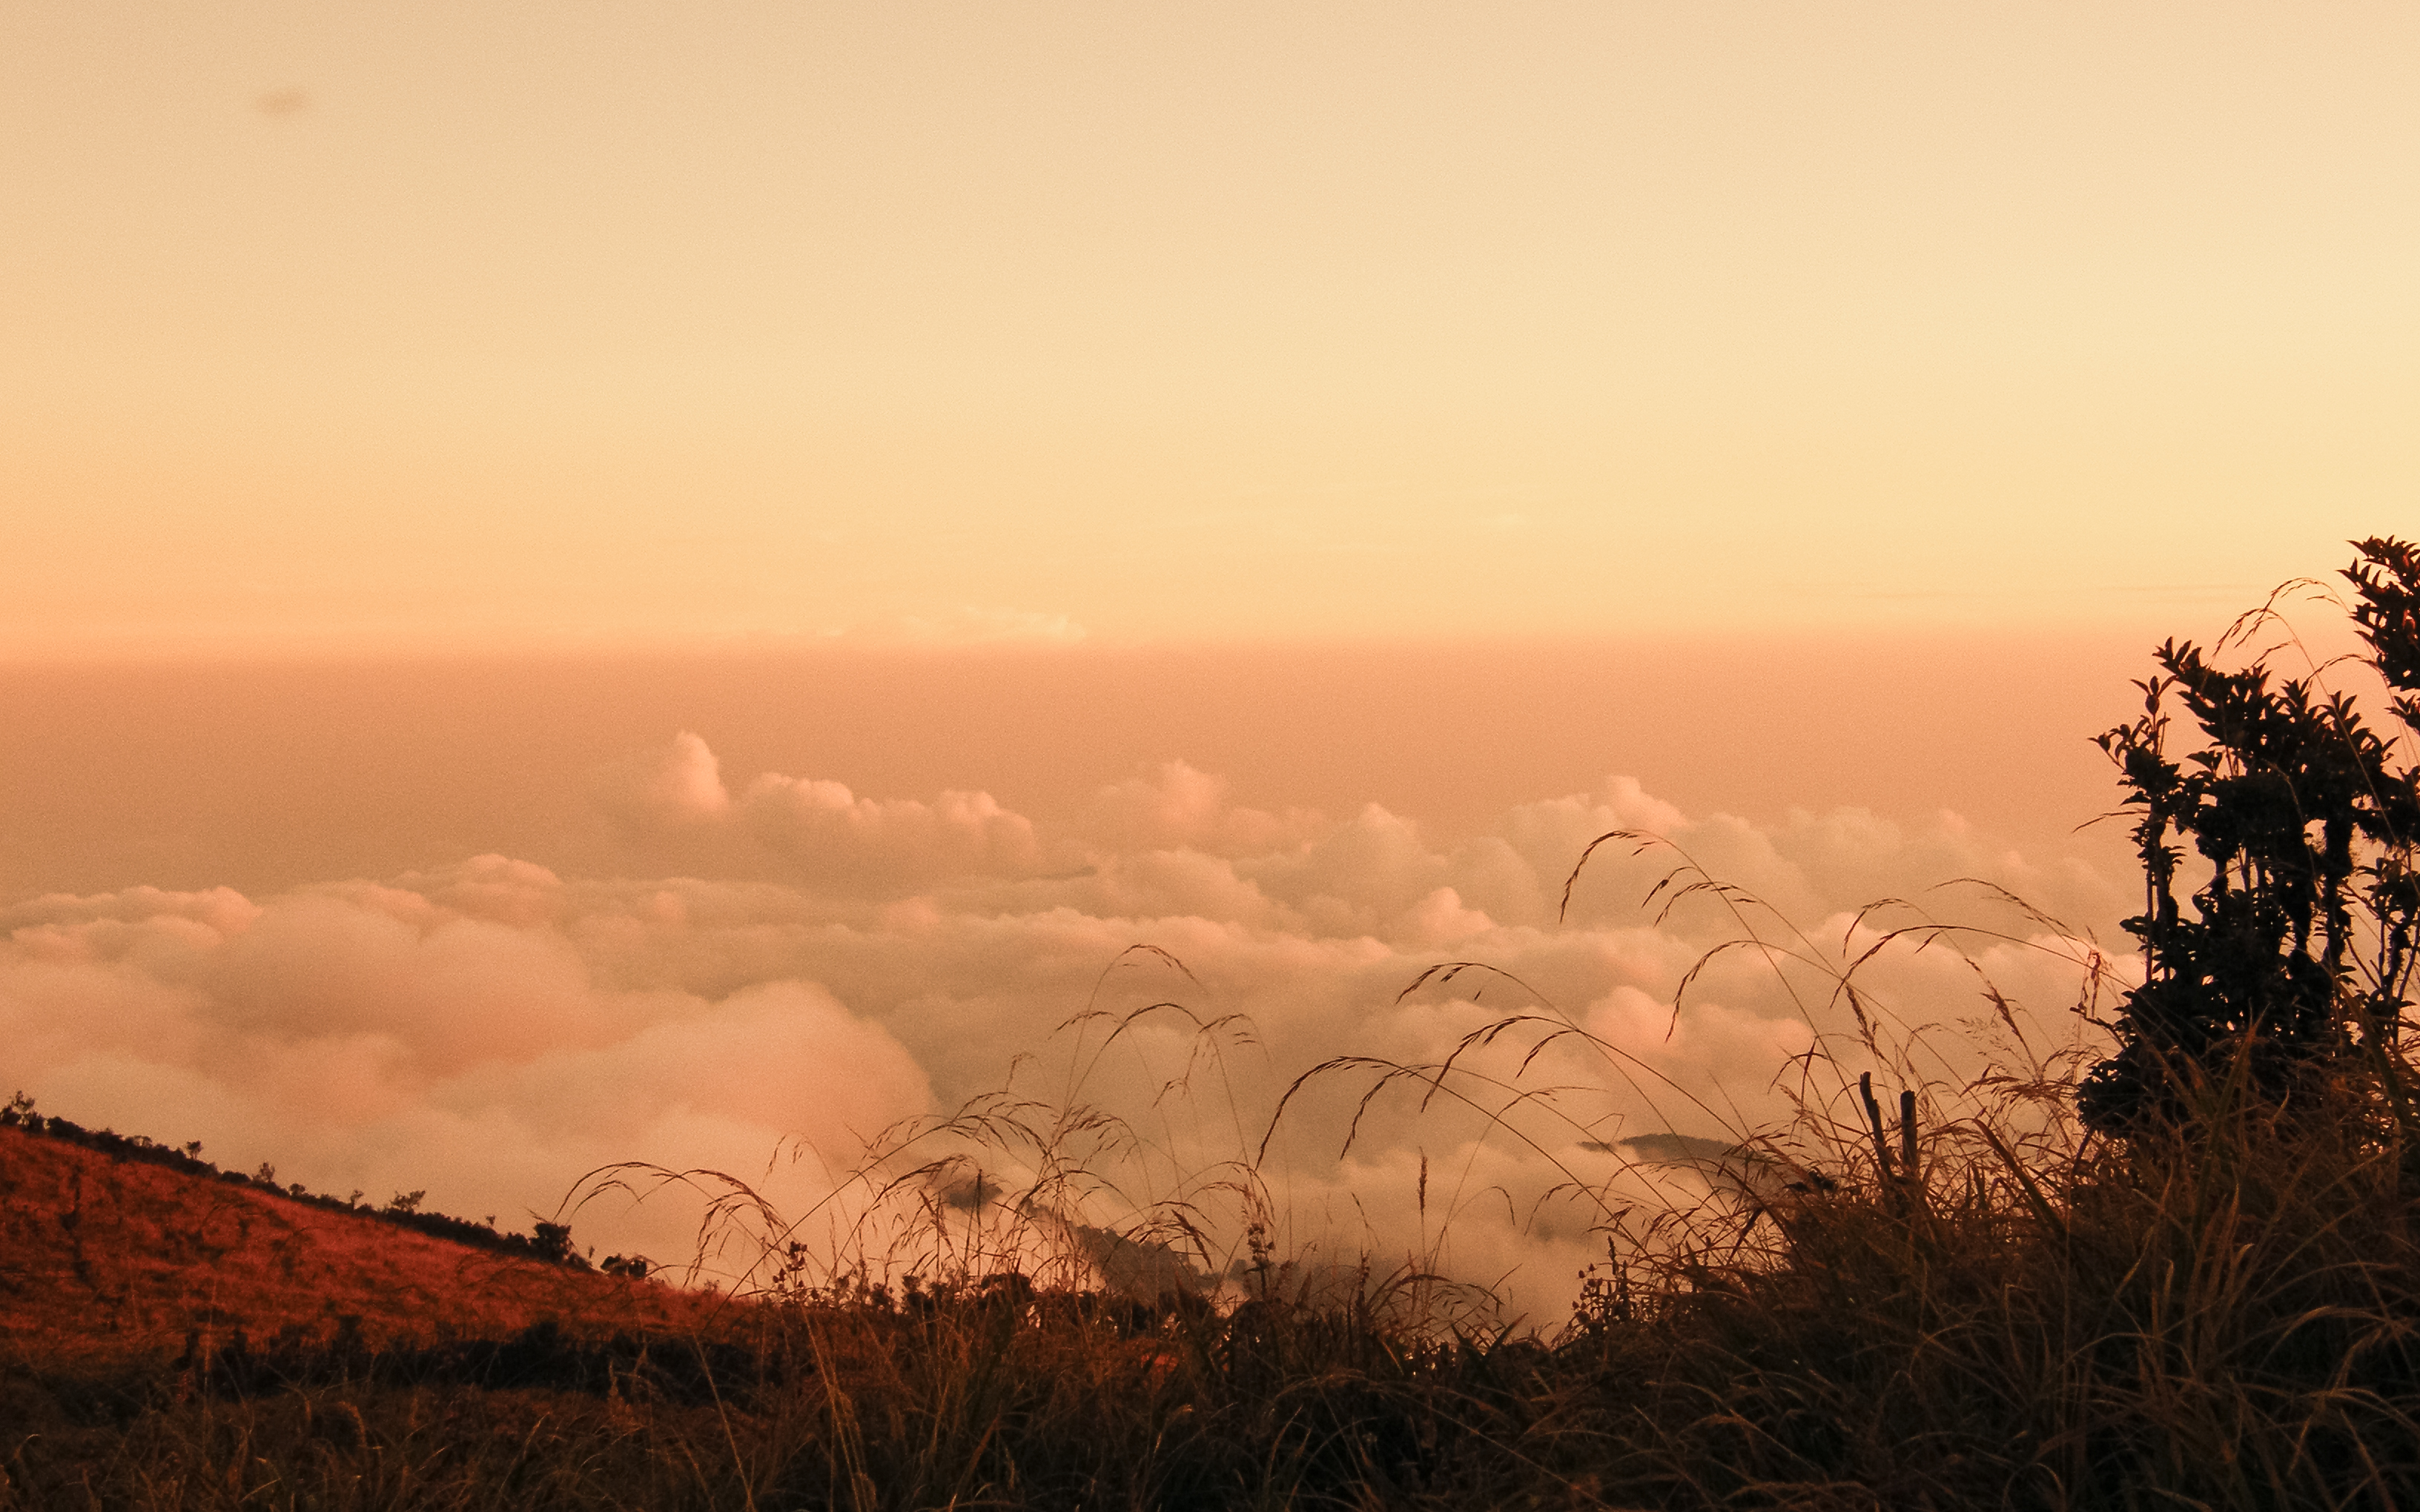 Sea of clouds - Singalila National Park